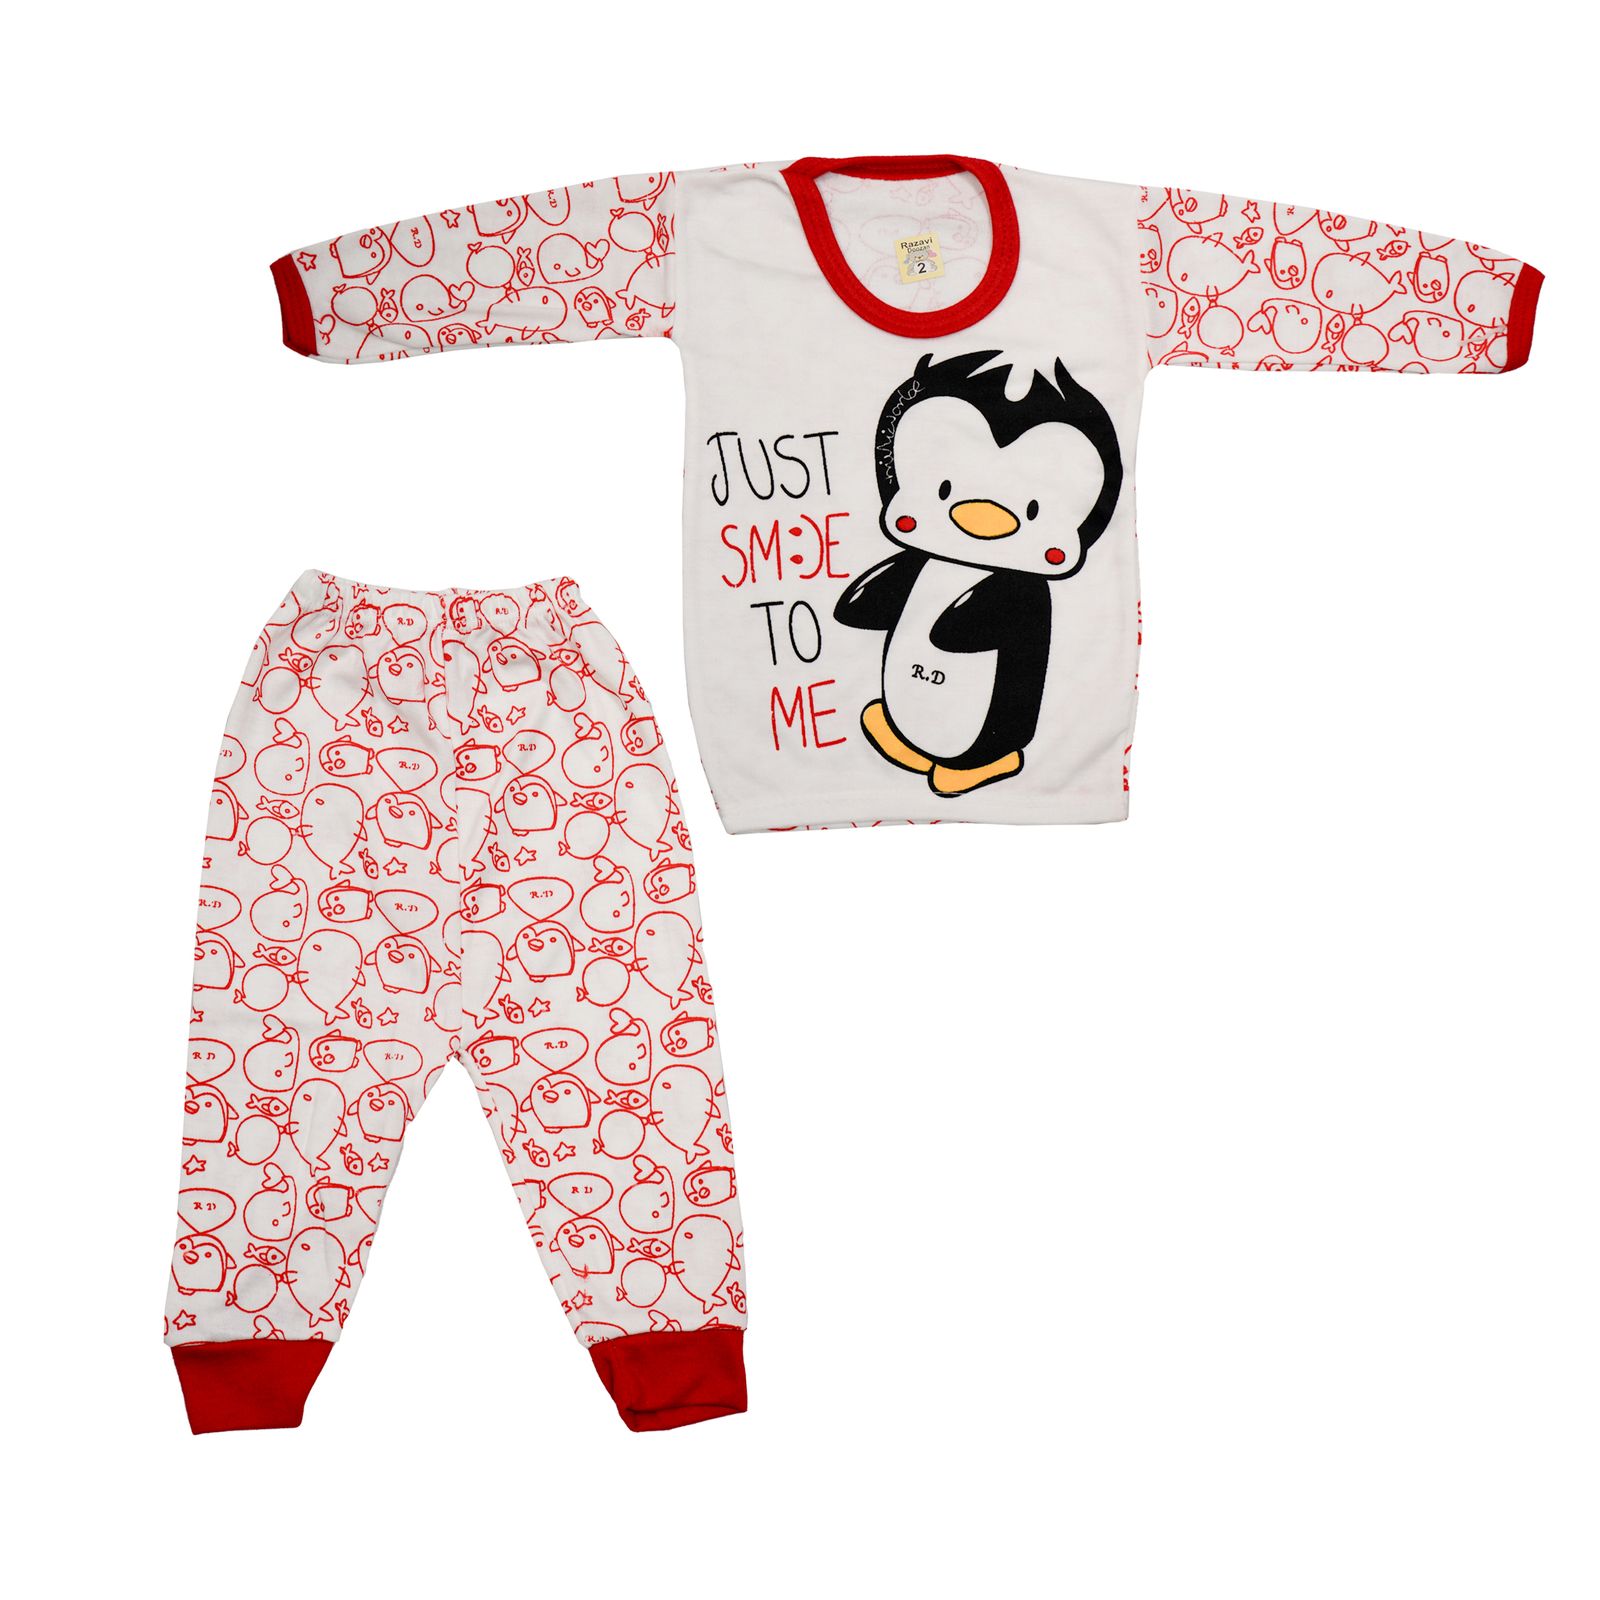 ست تی شرت و شلوار نوزادی مدل پنگوئن کد 1 رنگ قرمز -  - 1